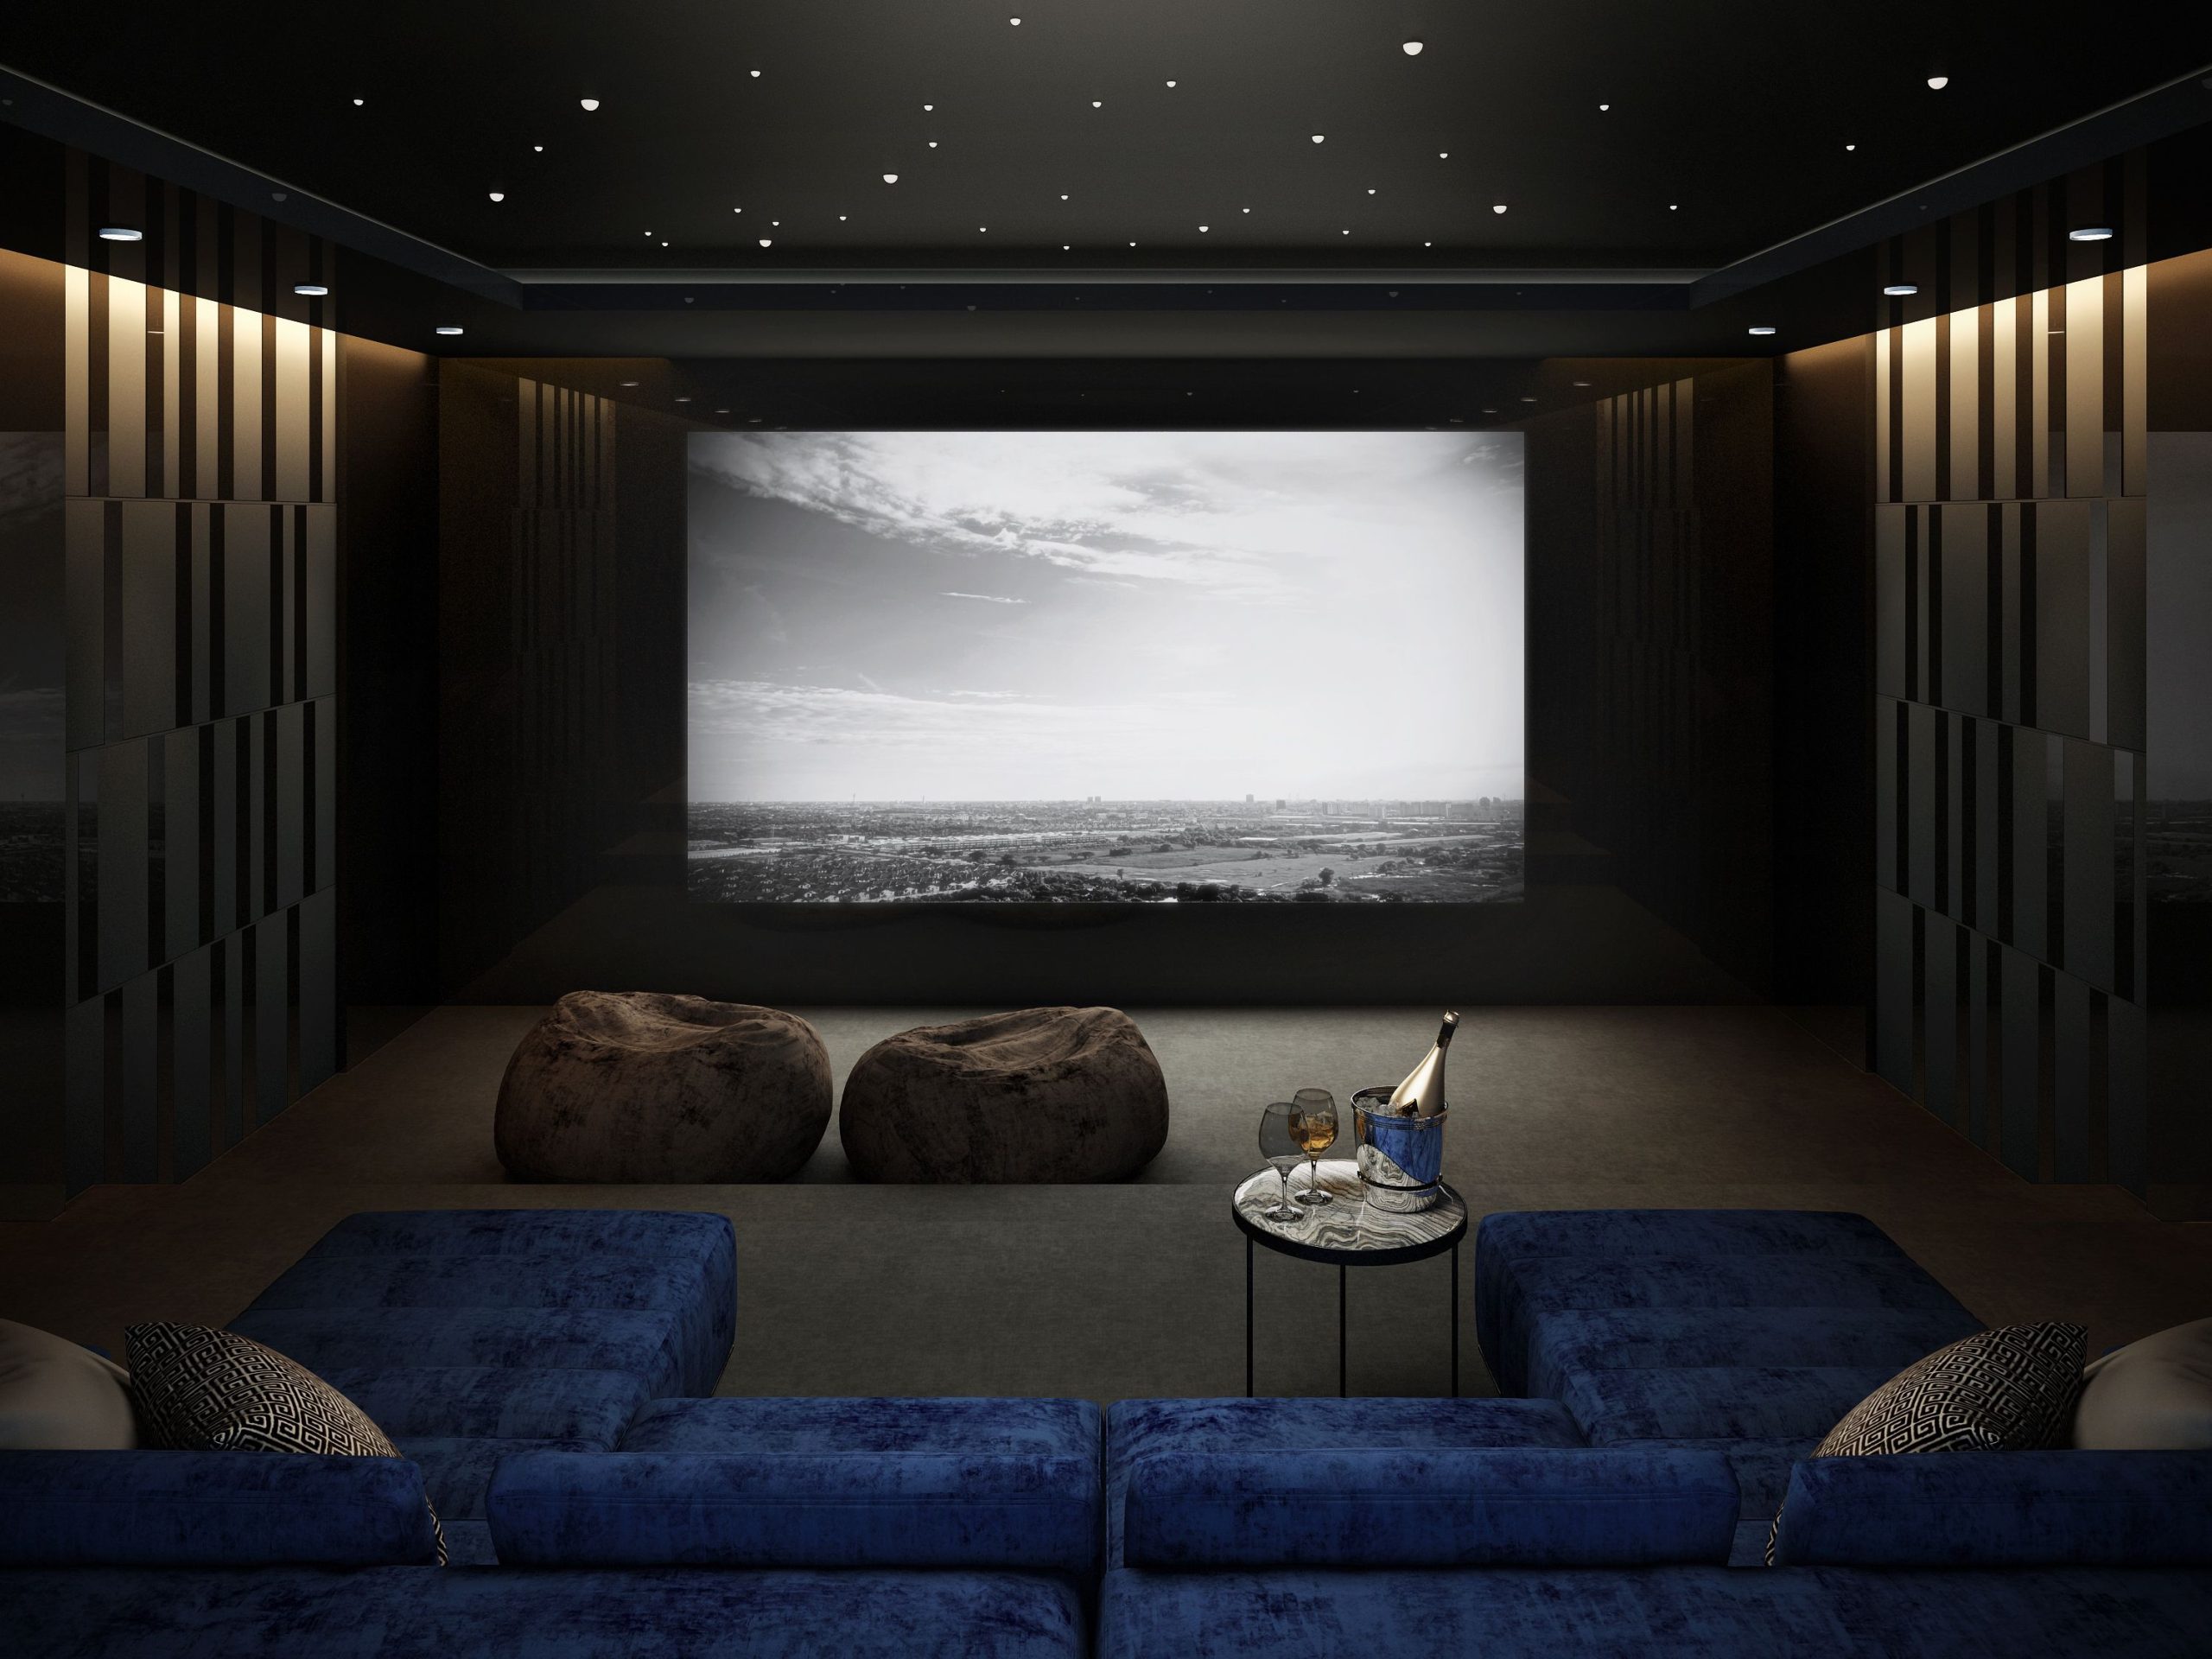 Luxury Home Cinema